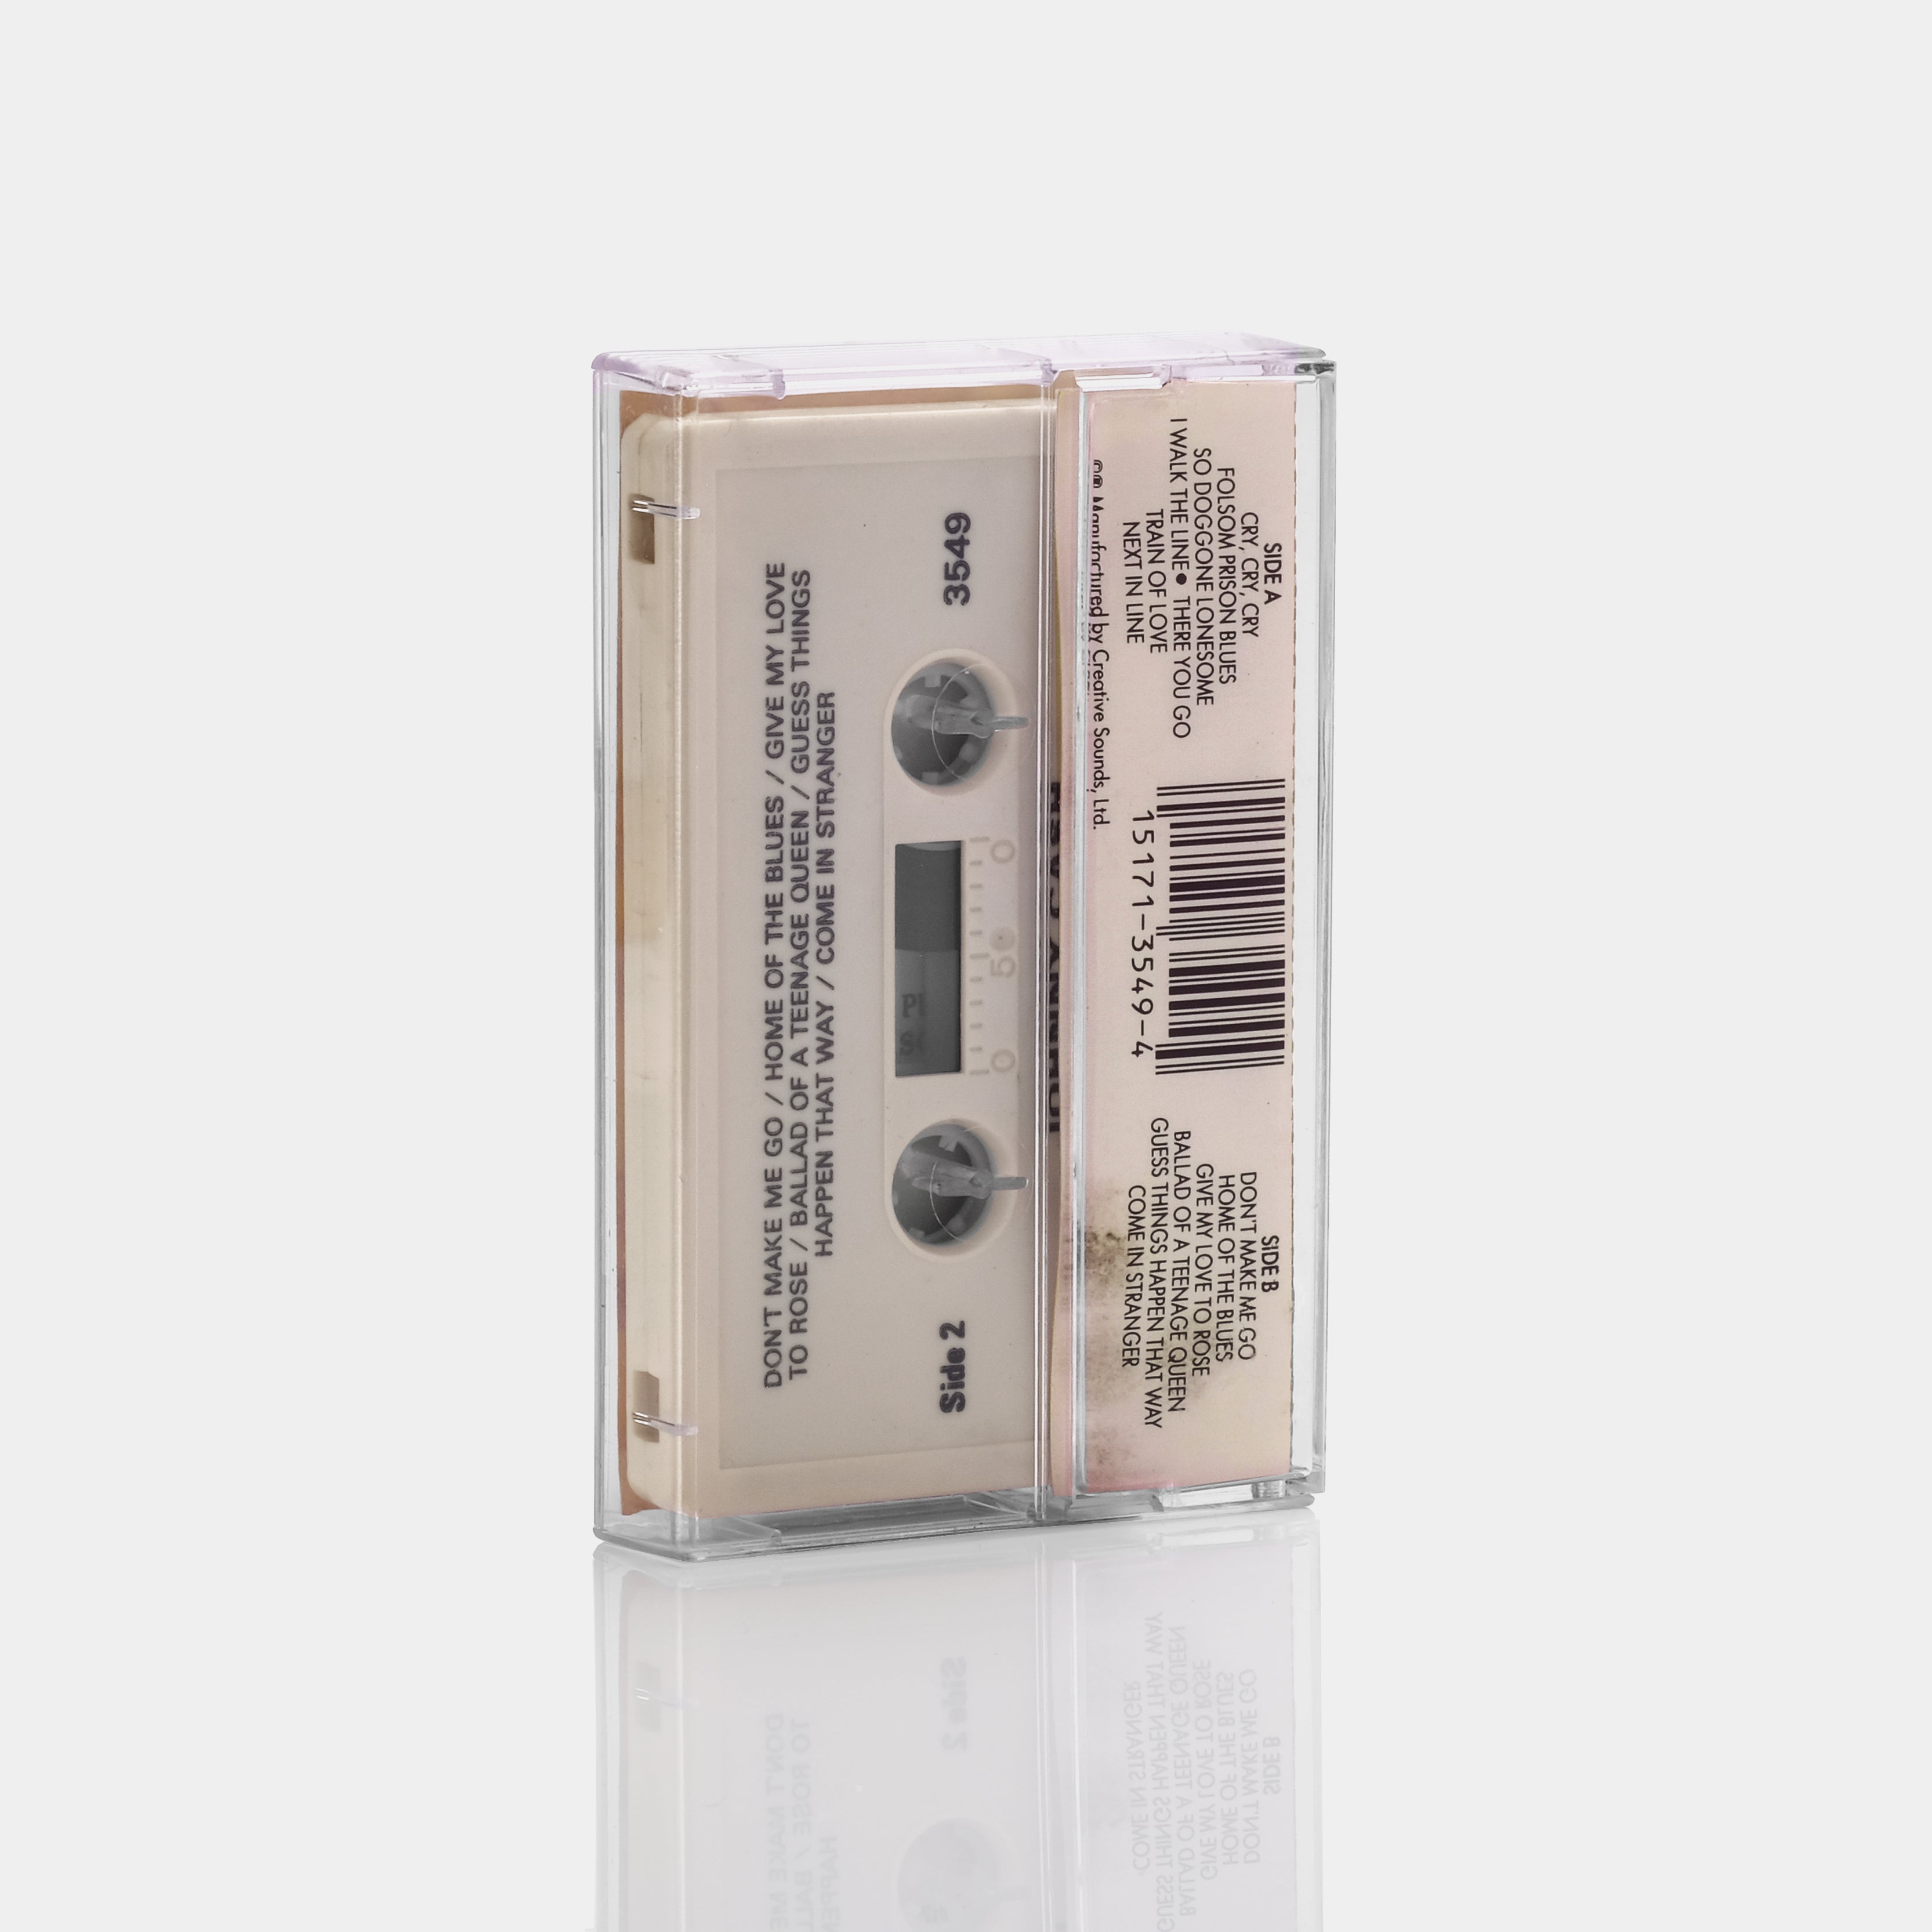 Johnny Cash - Greatest Hits Vol. 1 Cassette Tape